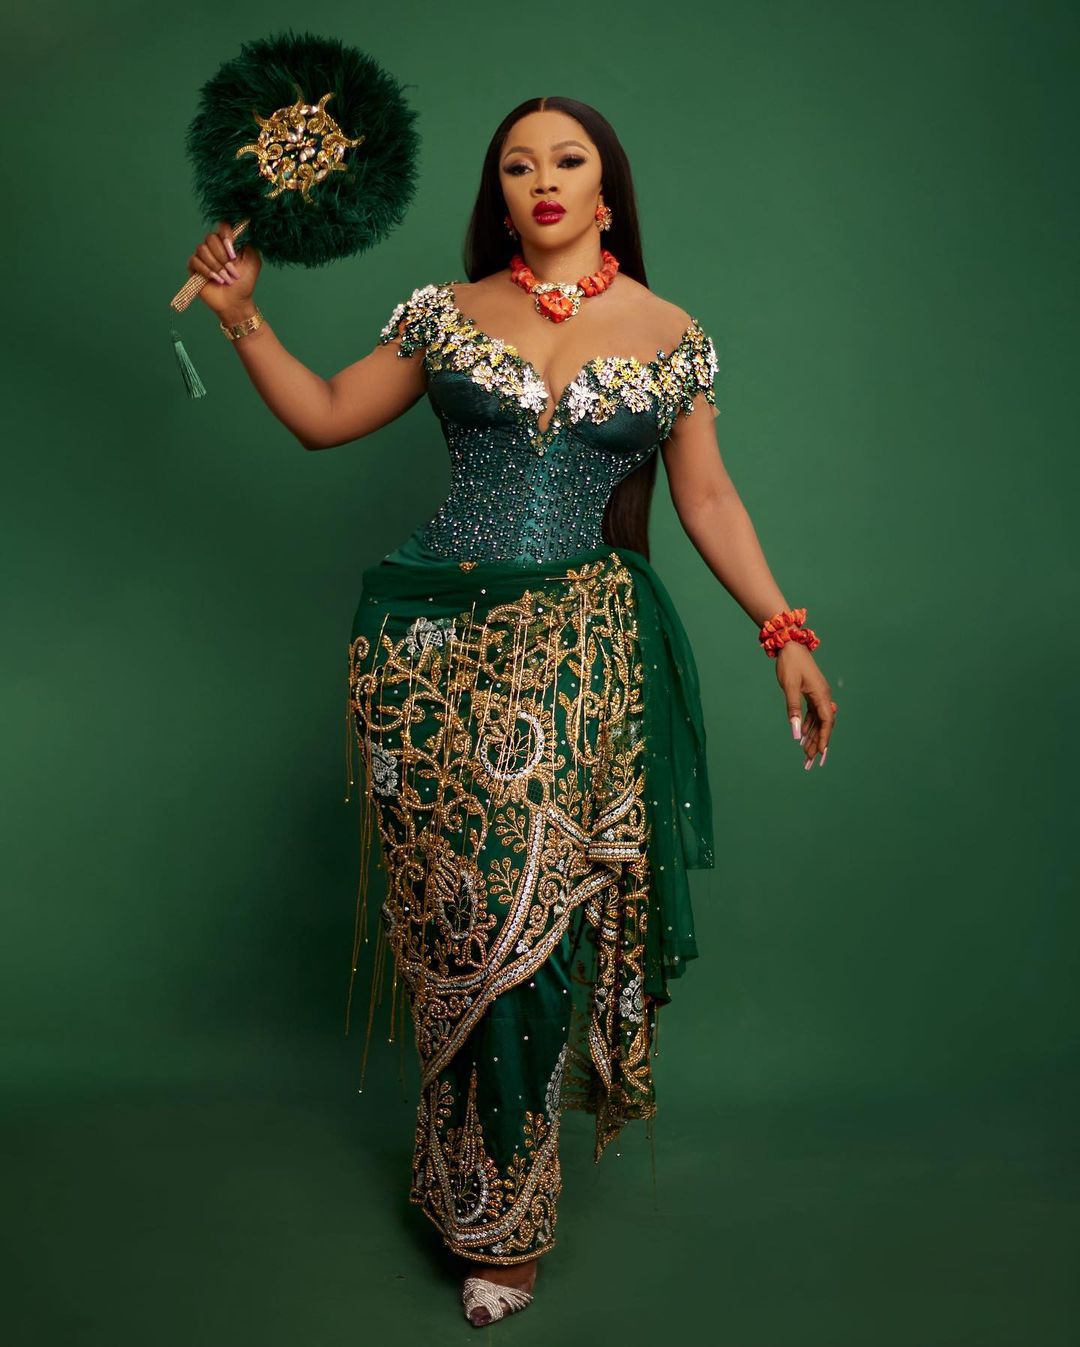 Toke Makinwa dressed in Traditional wear to celebrate Nigeria independence 